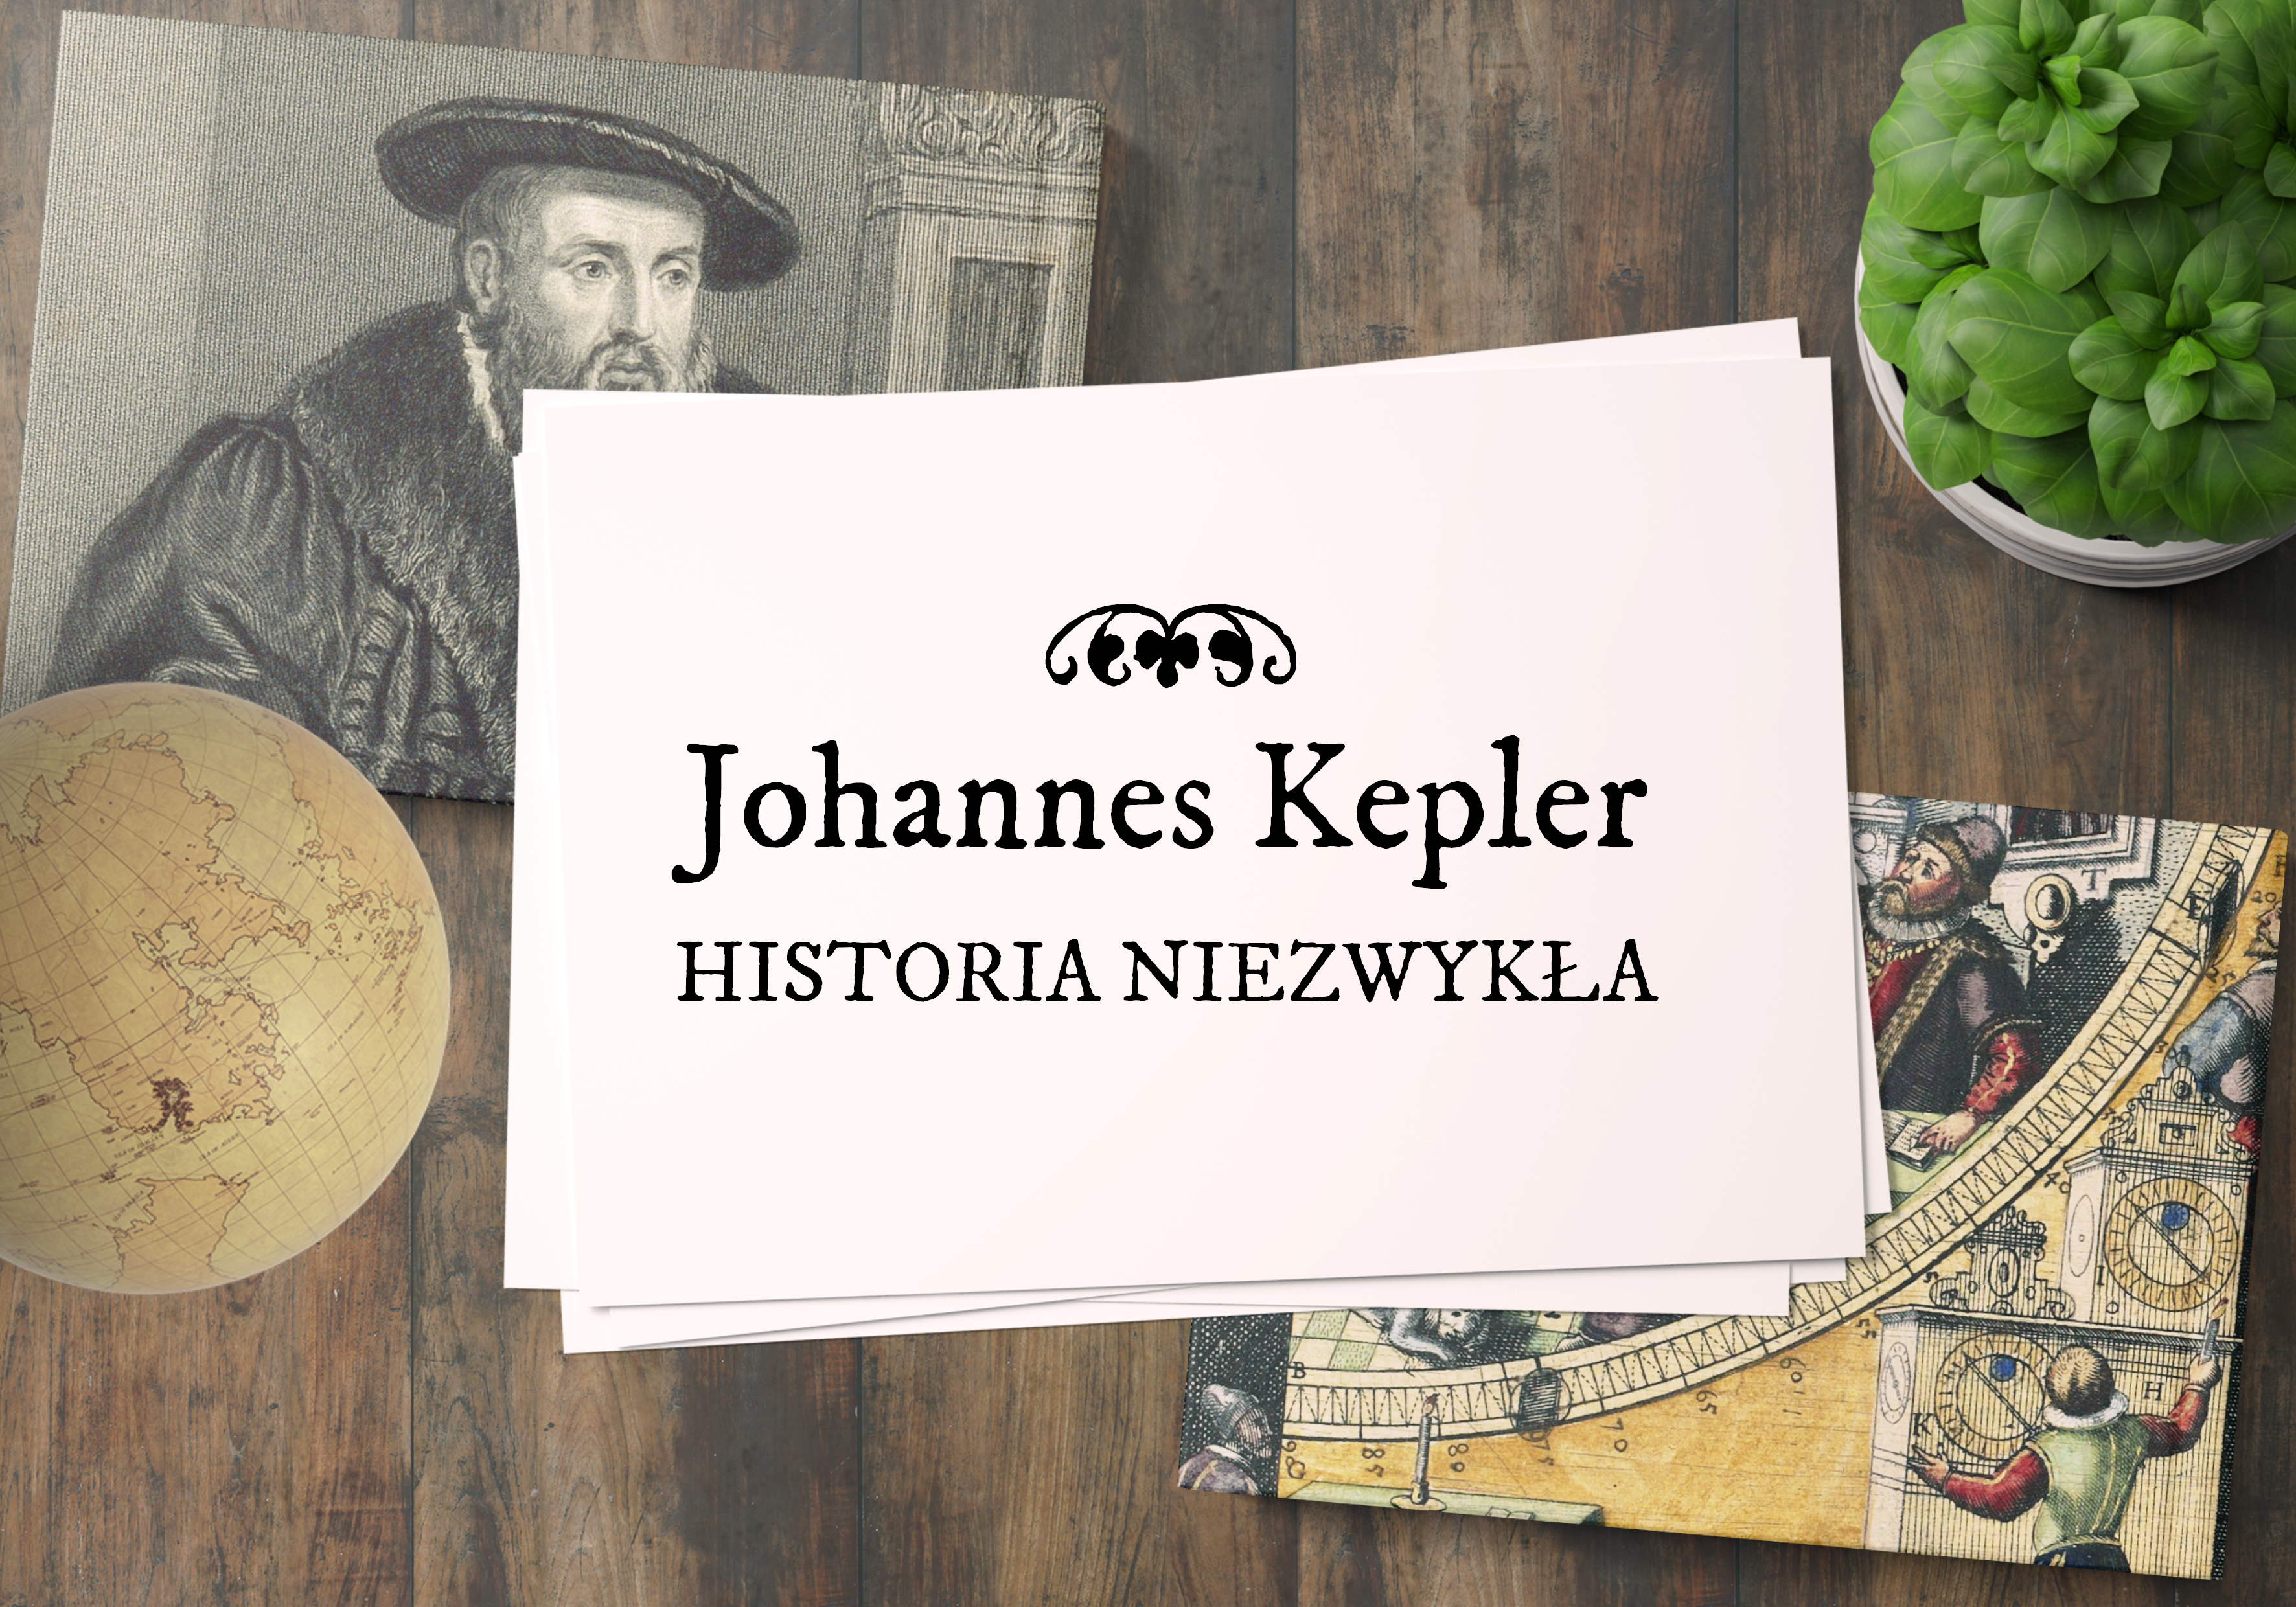 Johannes Kepler - prezentacja